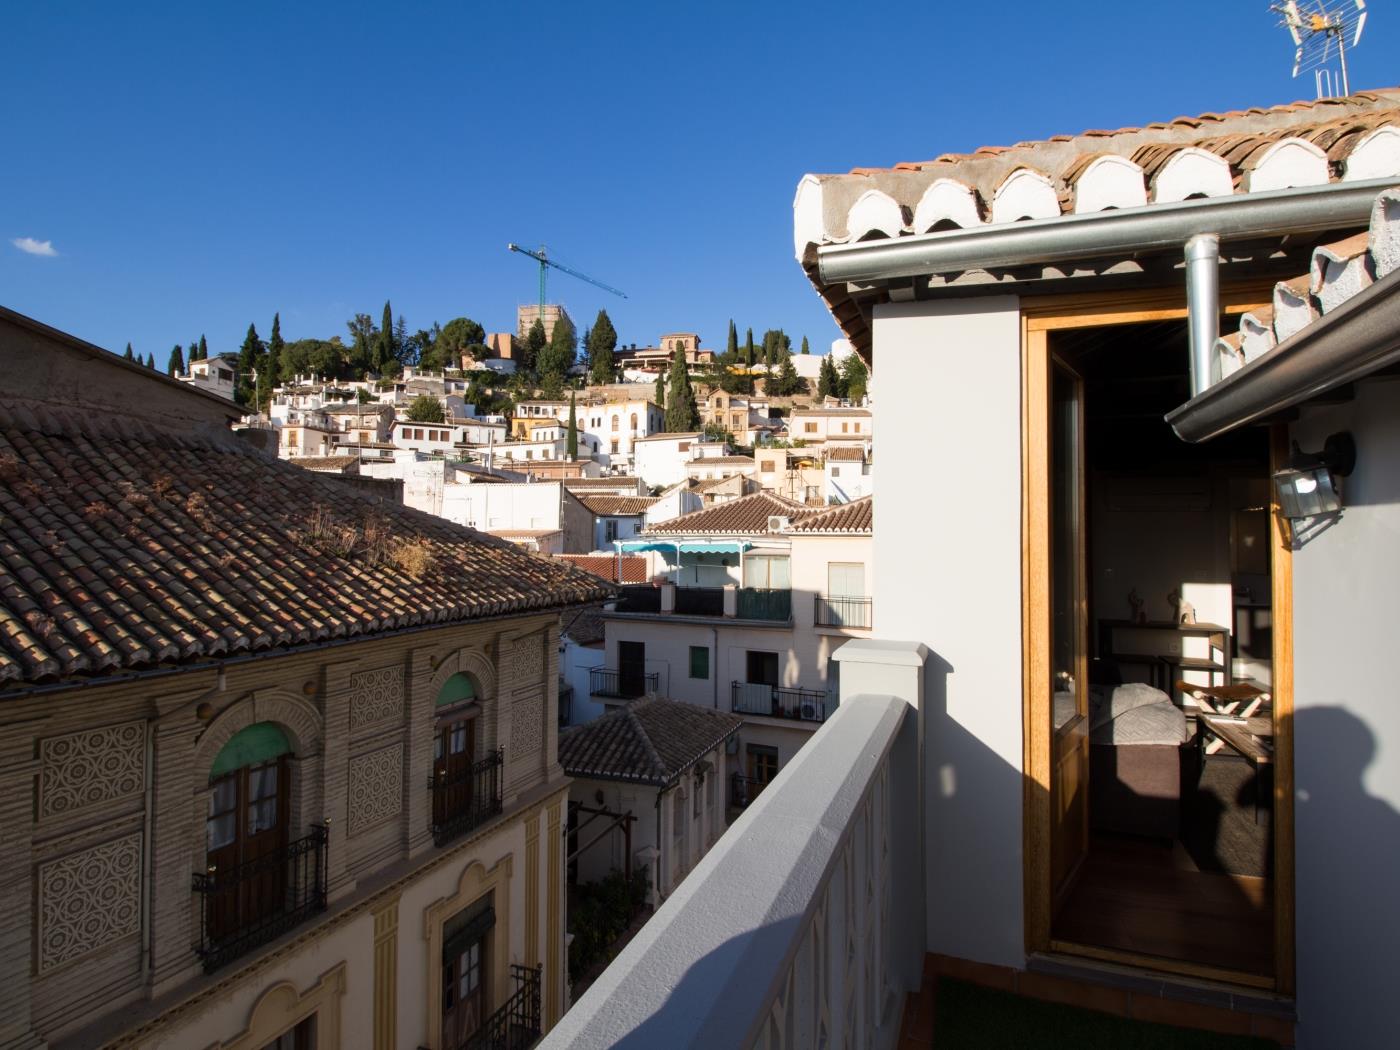 Ático Fortuny in Granada